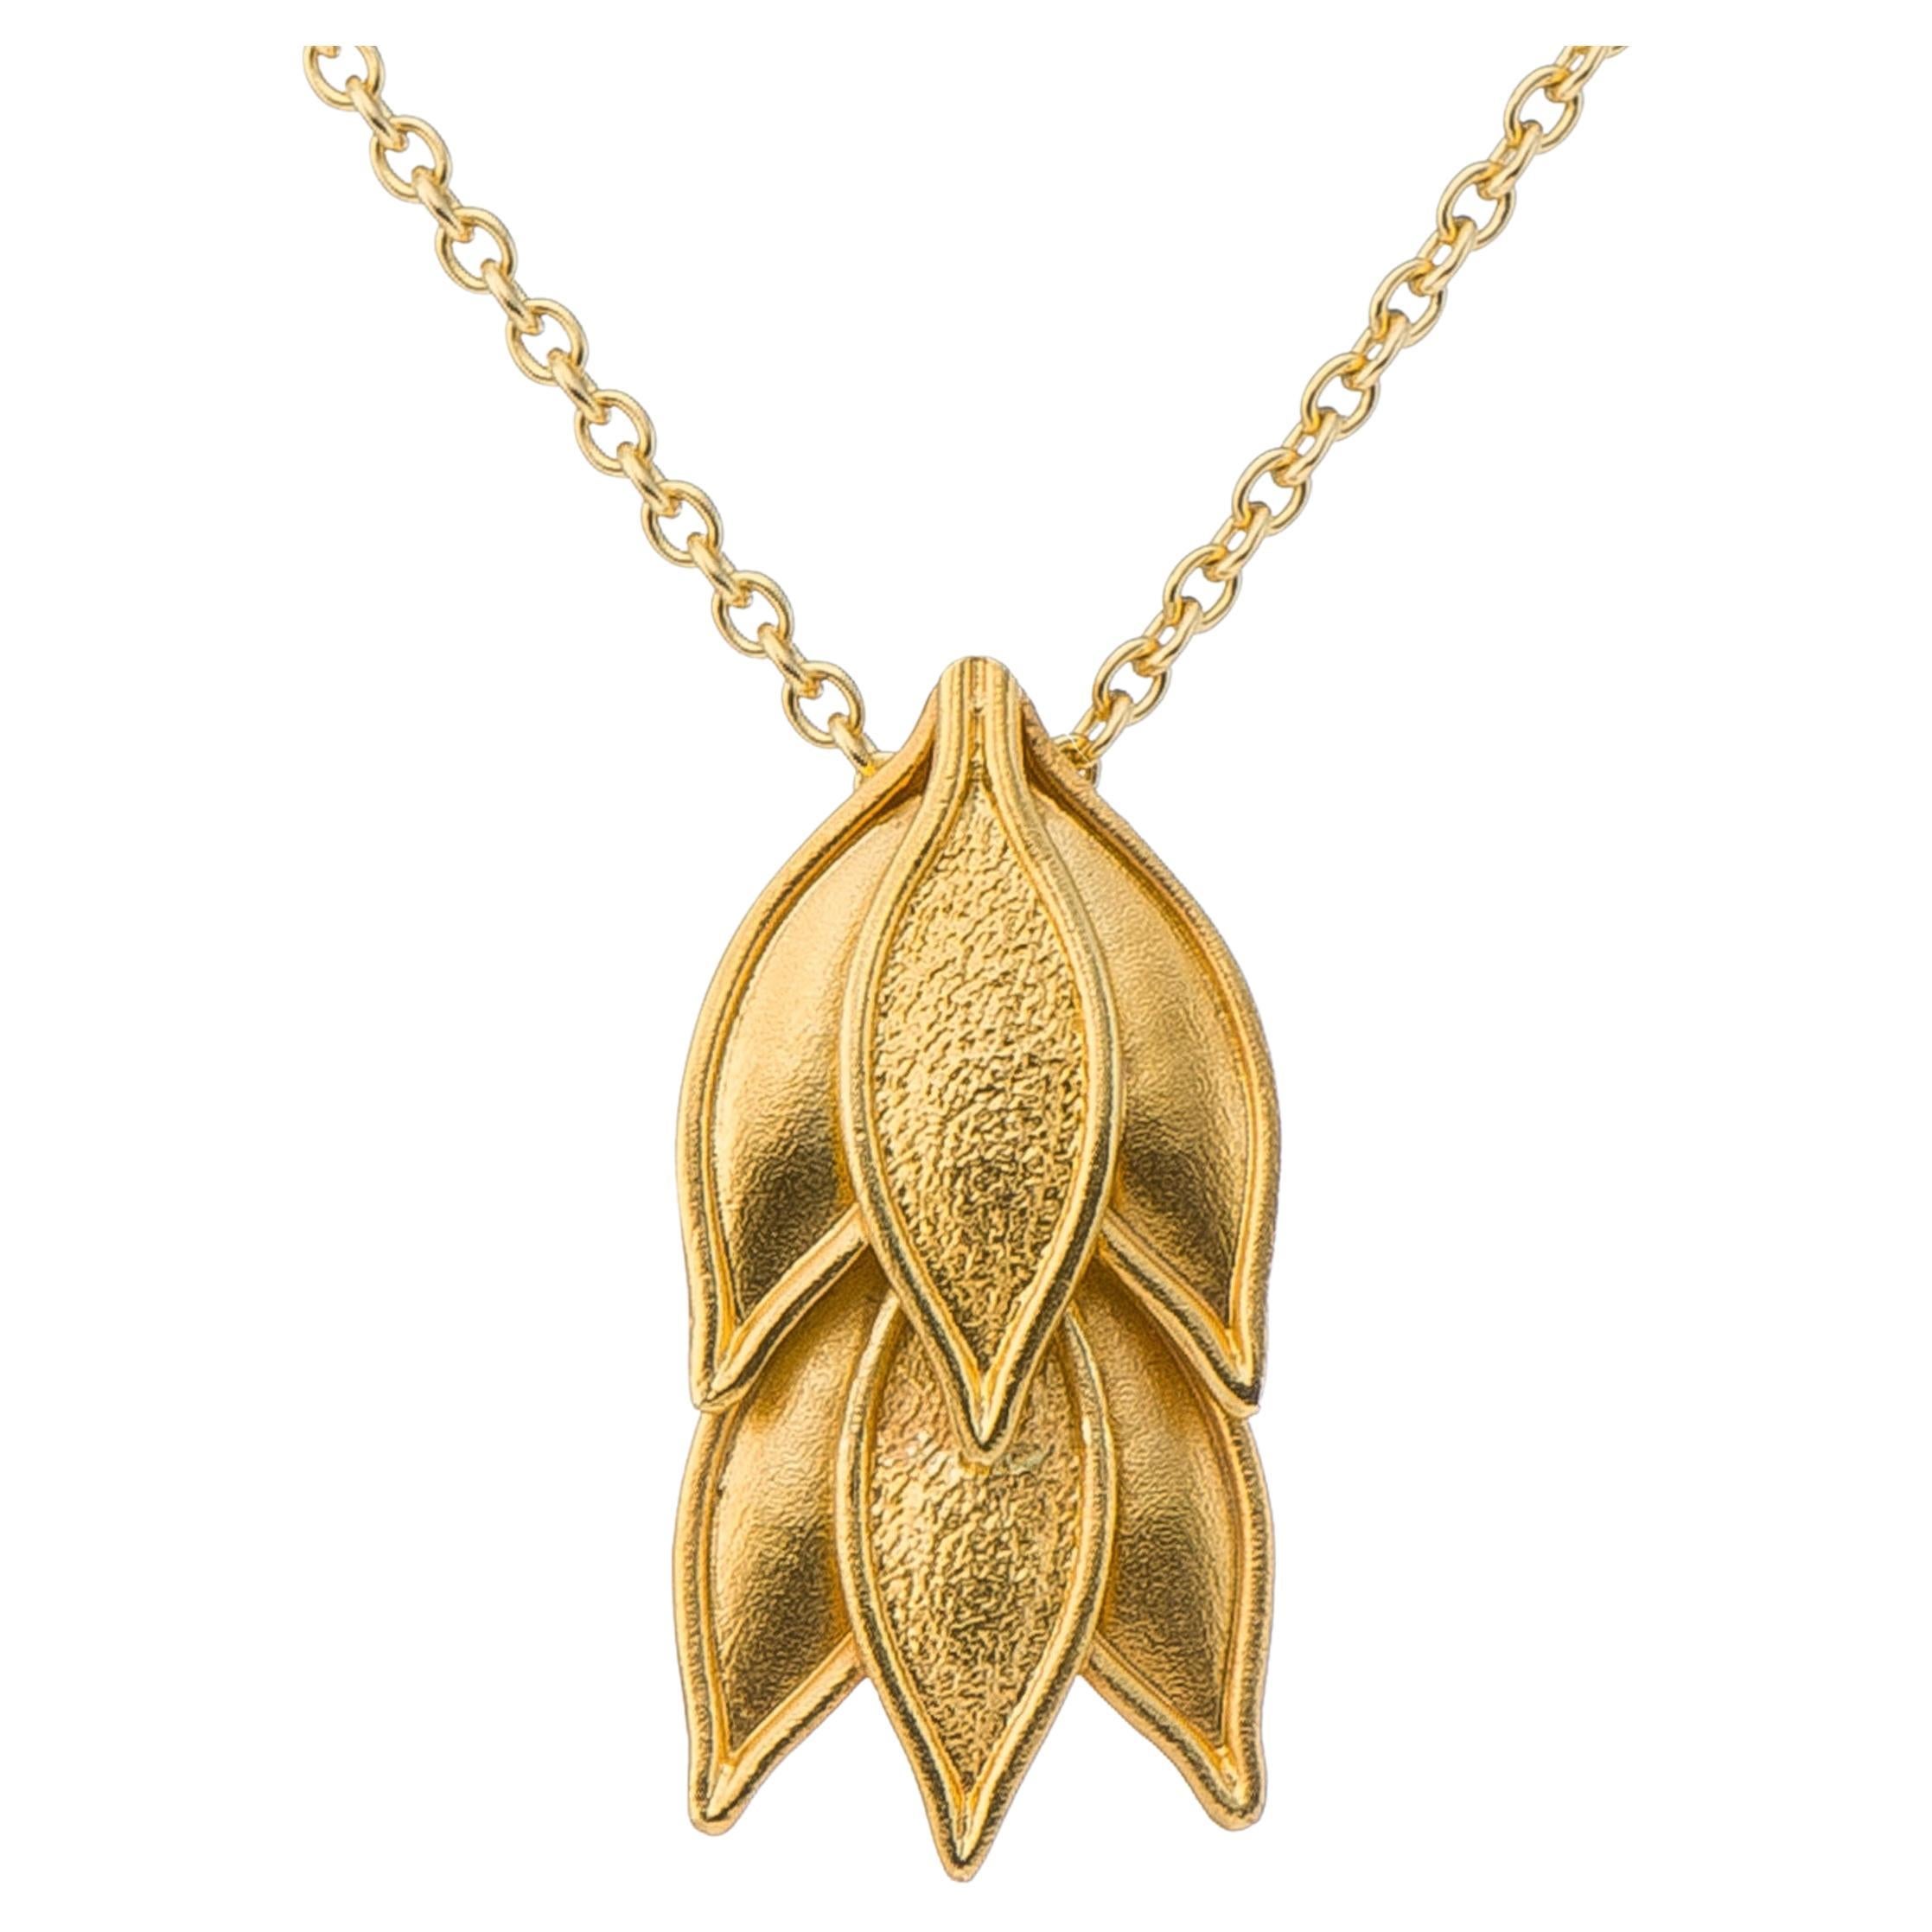 18K Byzantine Gold Laurel Pendant